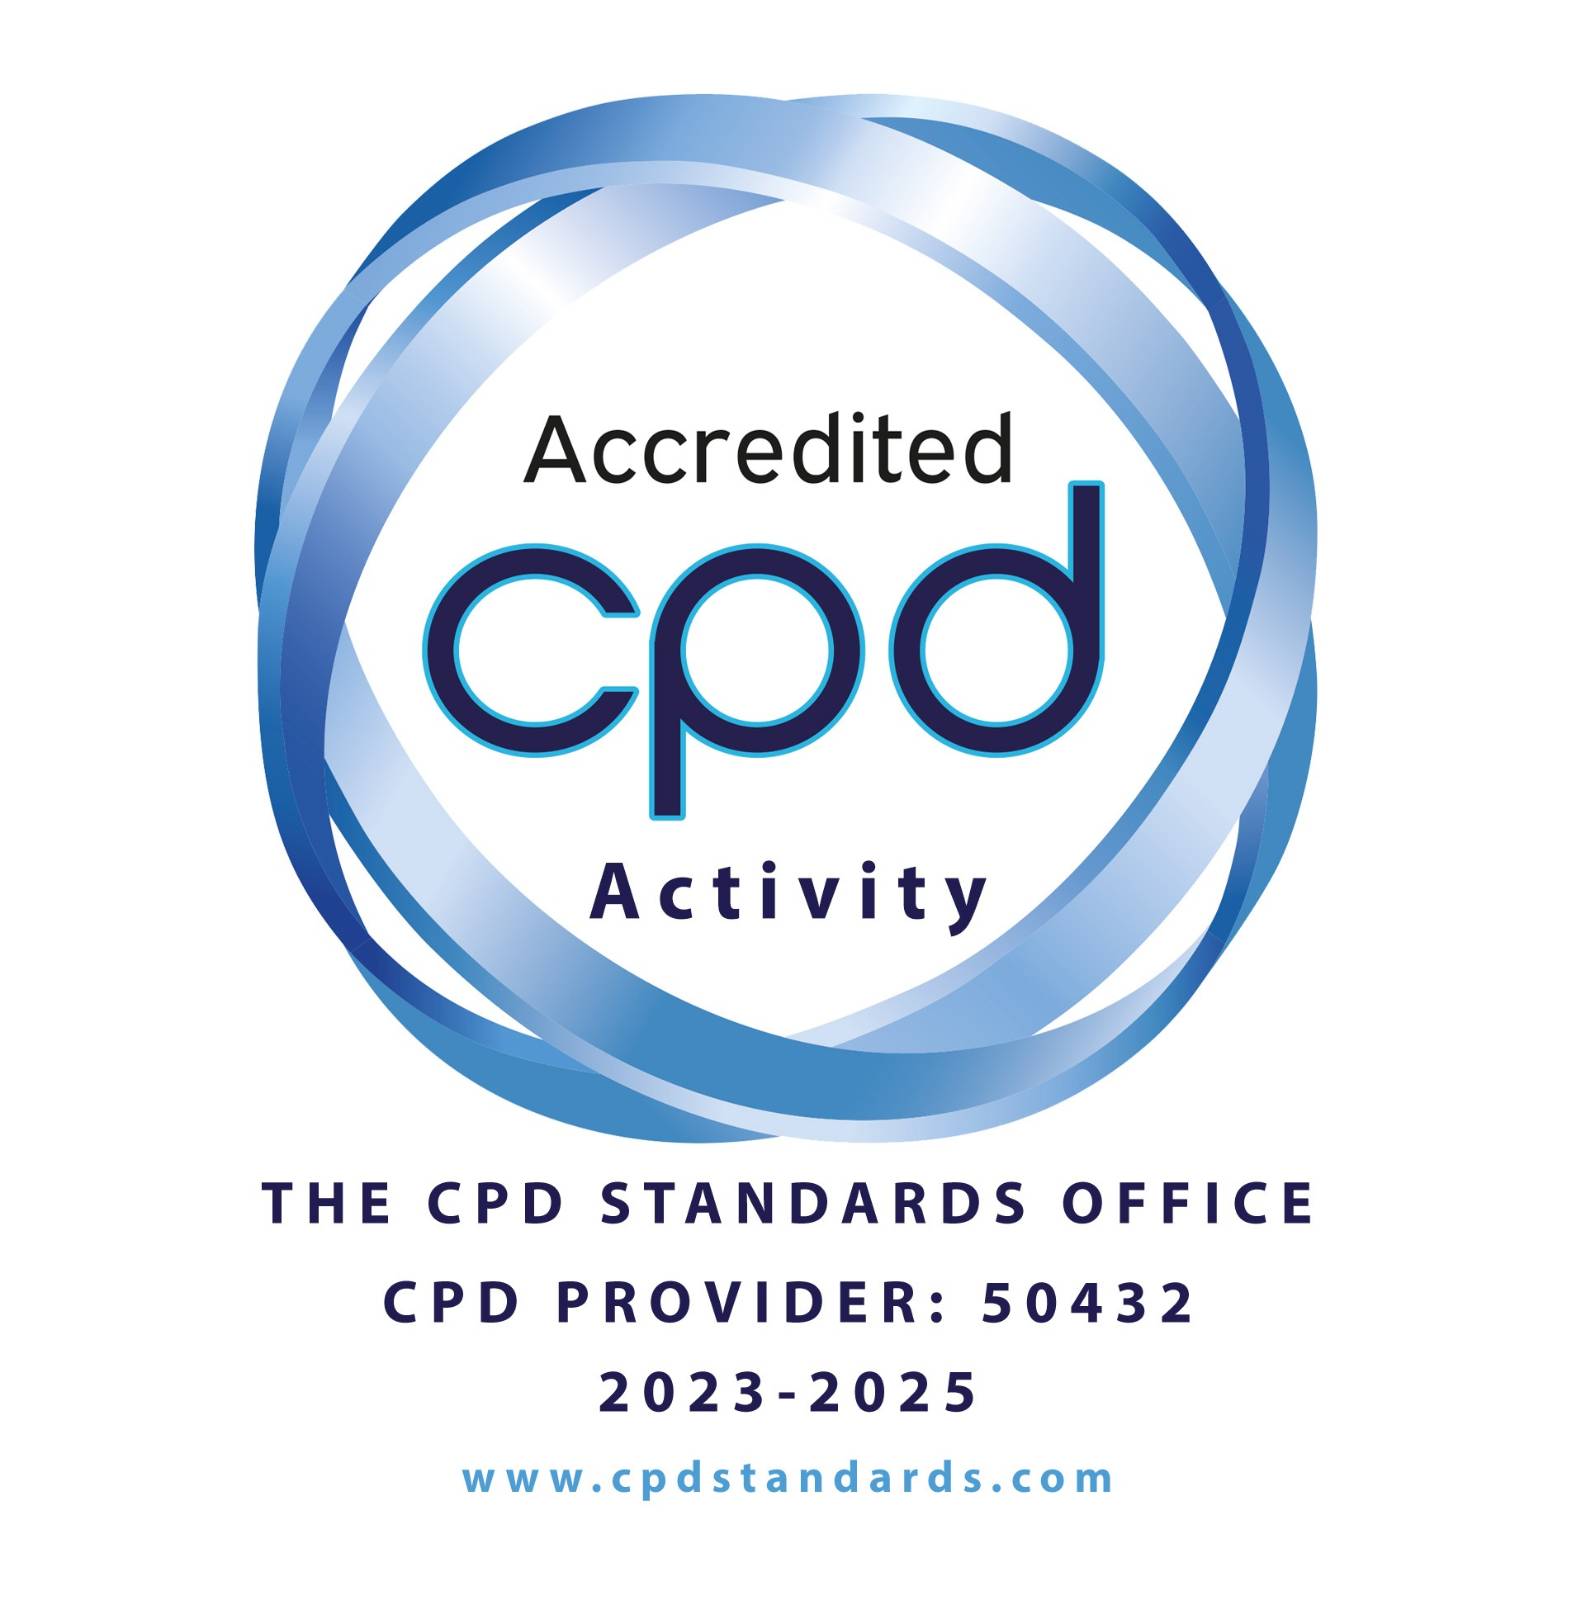 CPD standards office logo